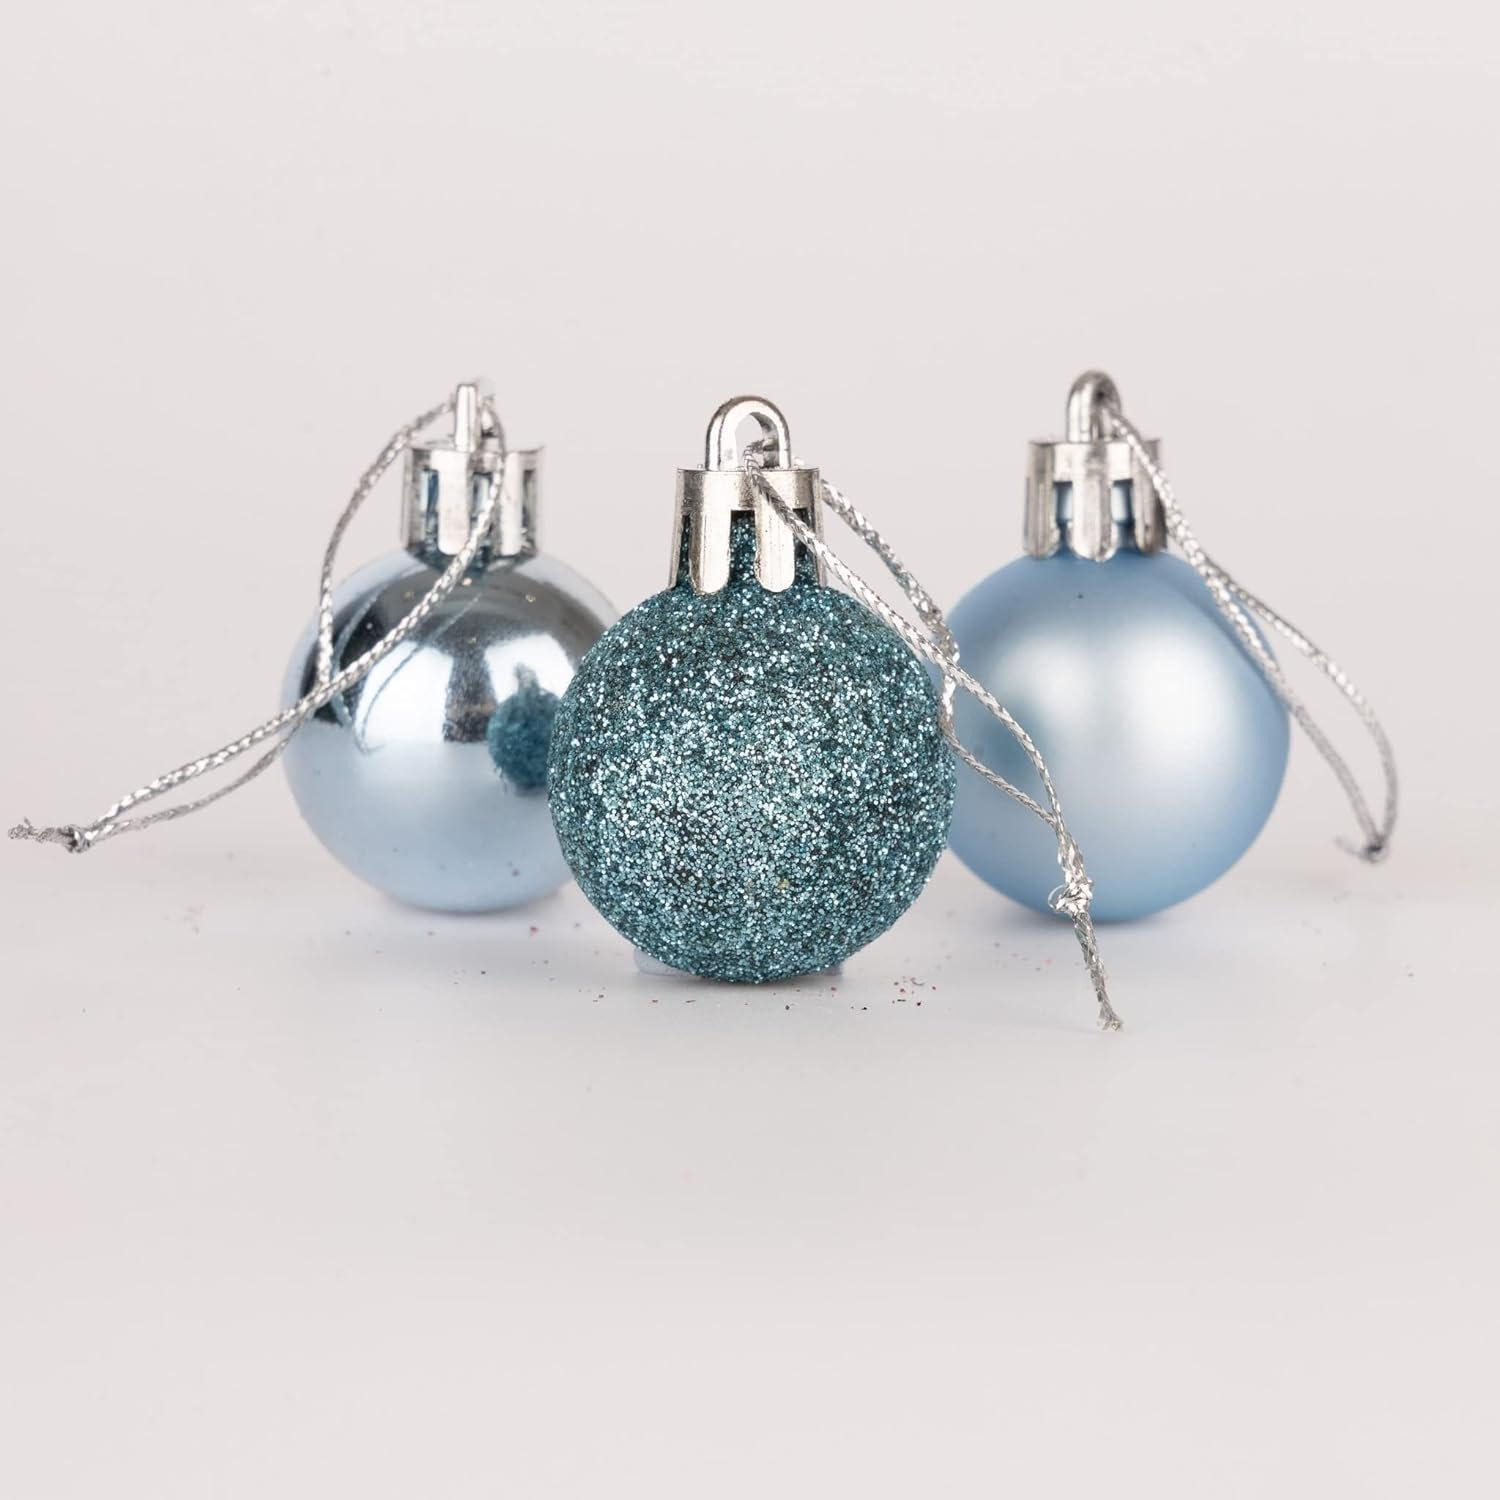 30mm/12Pcs Christmas Baubles Shatterproof Light Blue,Tree Decorations - image 1